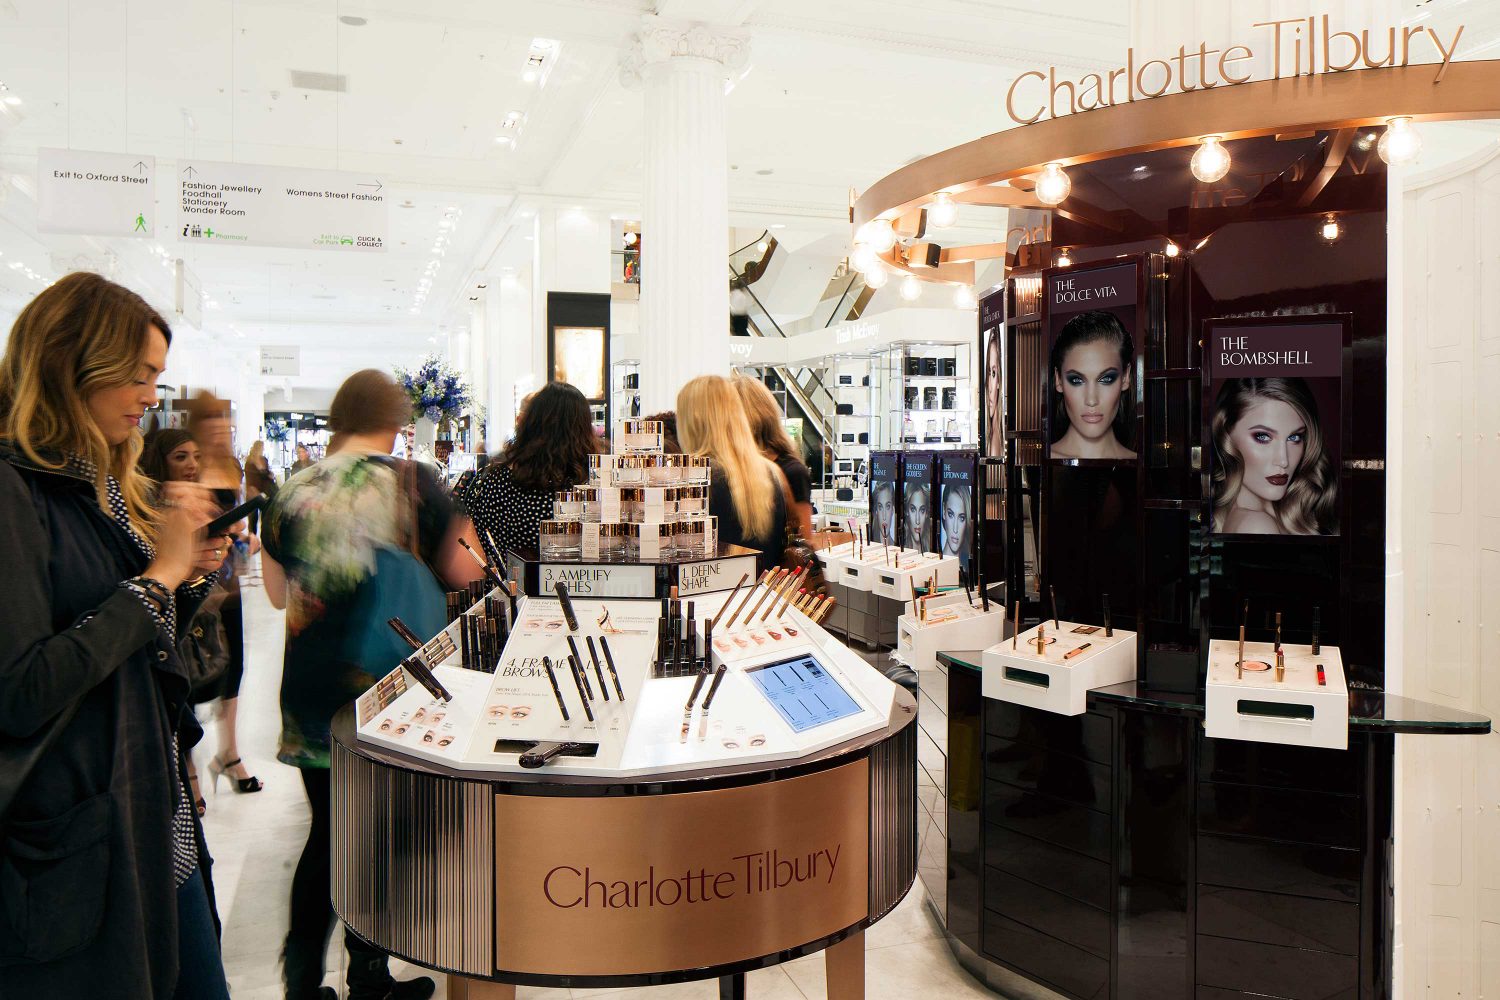 Charlotte Tilbury midfloor make-up display unit at Selfridges London, beauty retail concept, by Household.